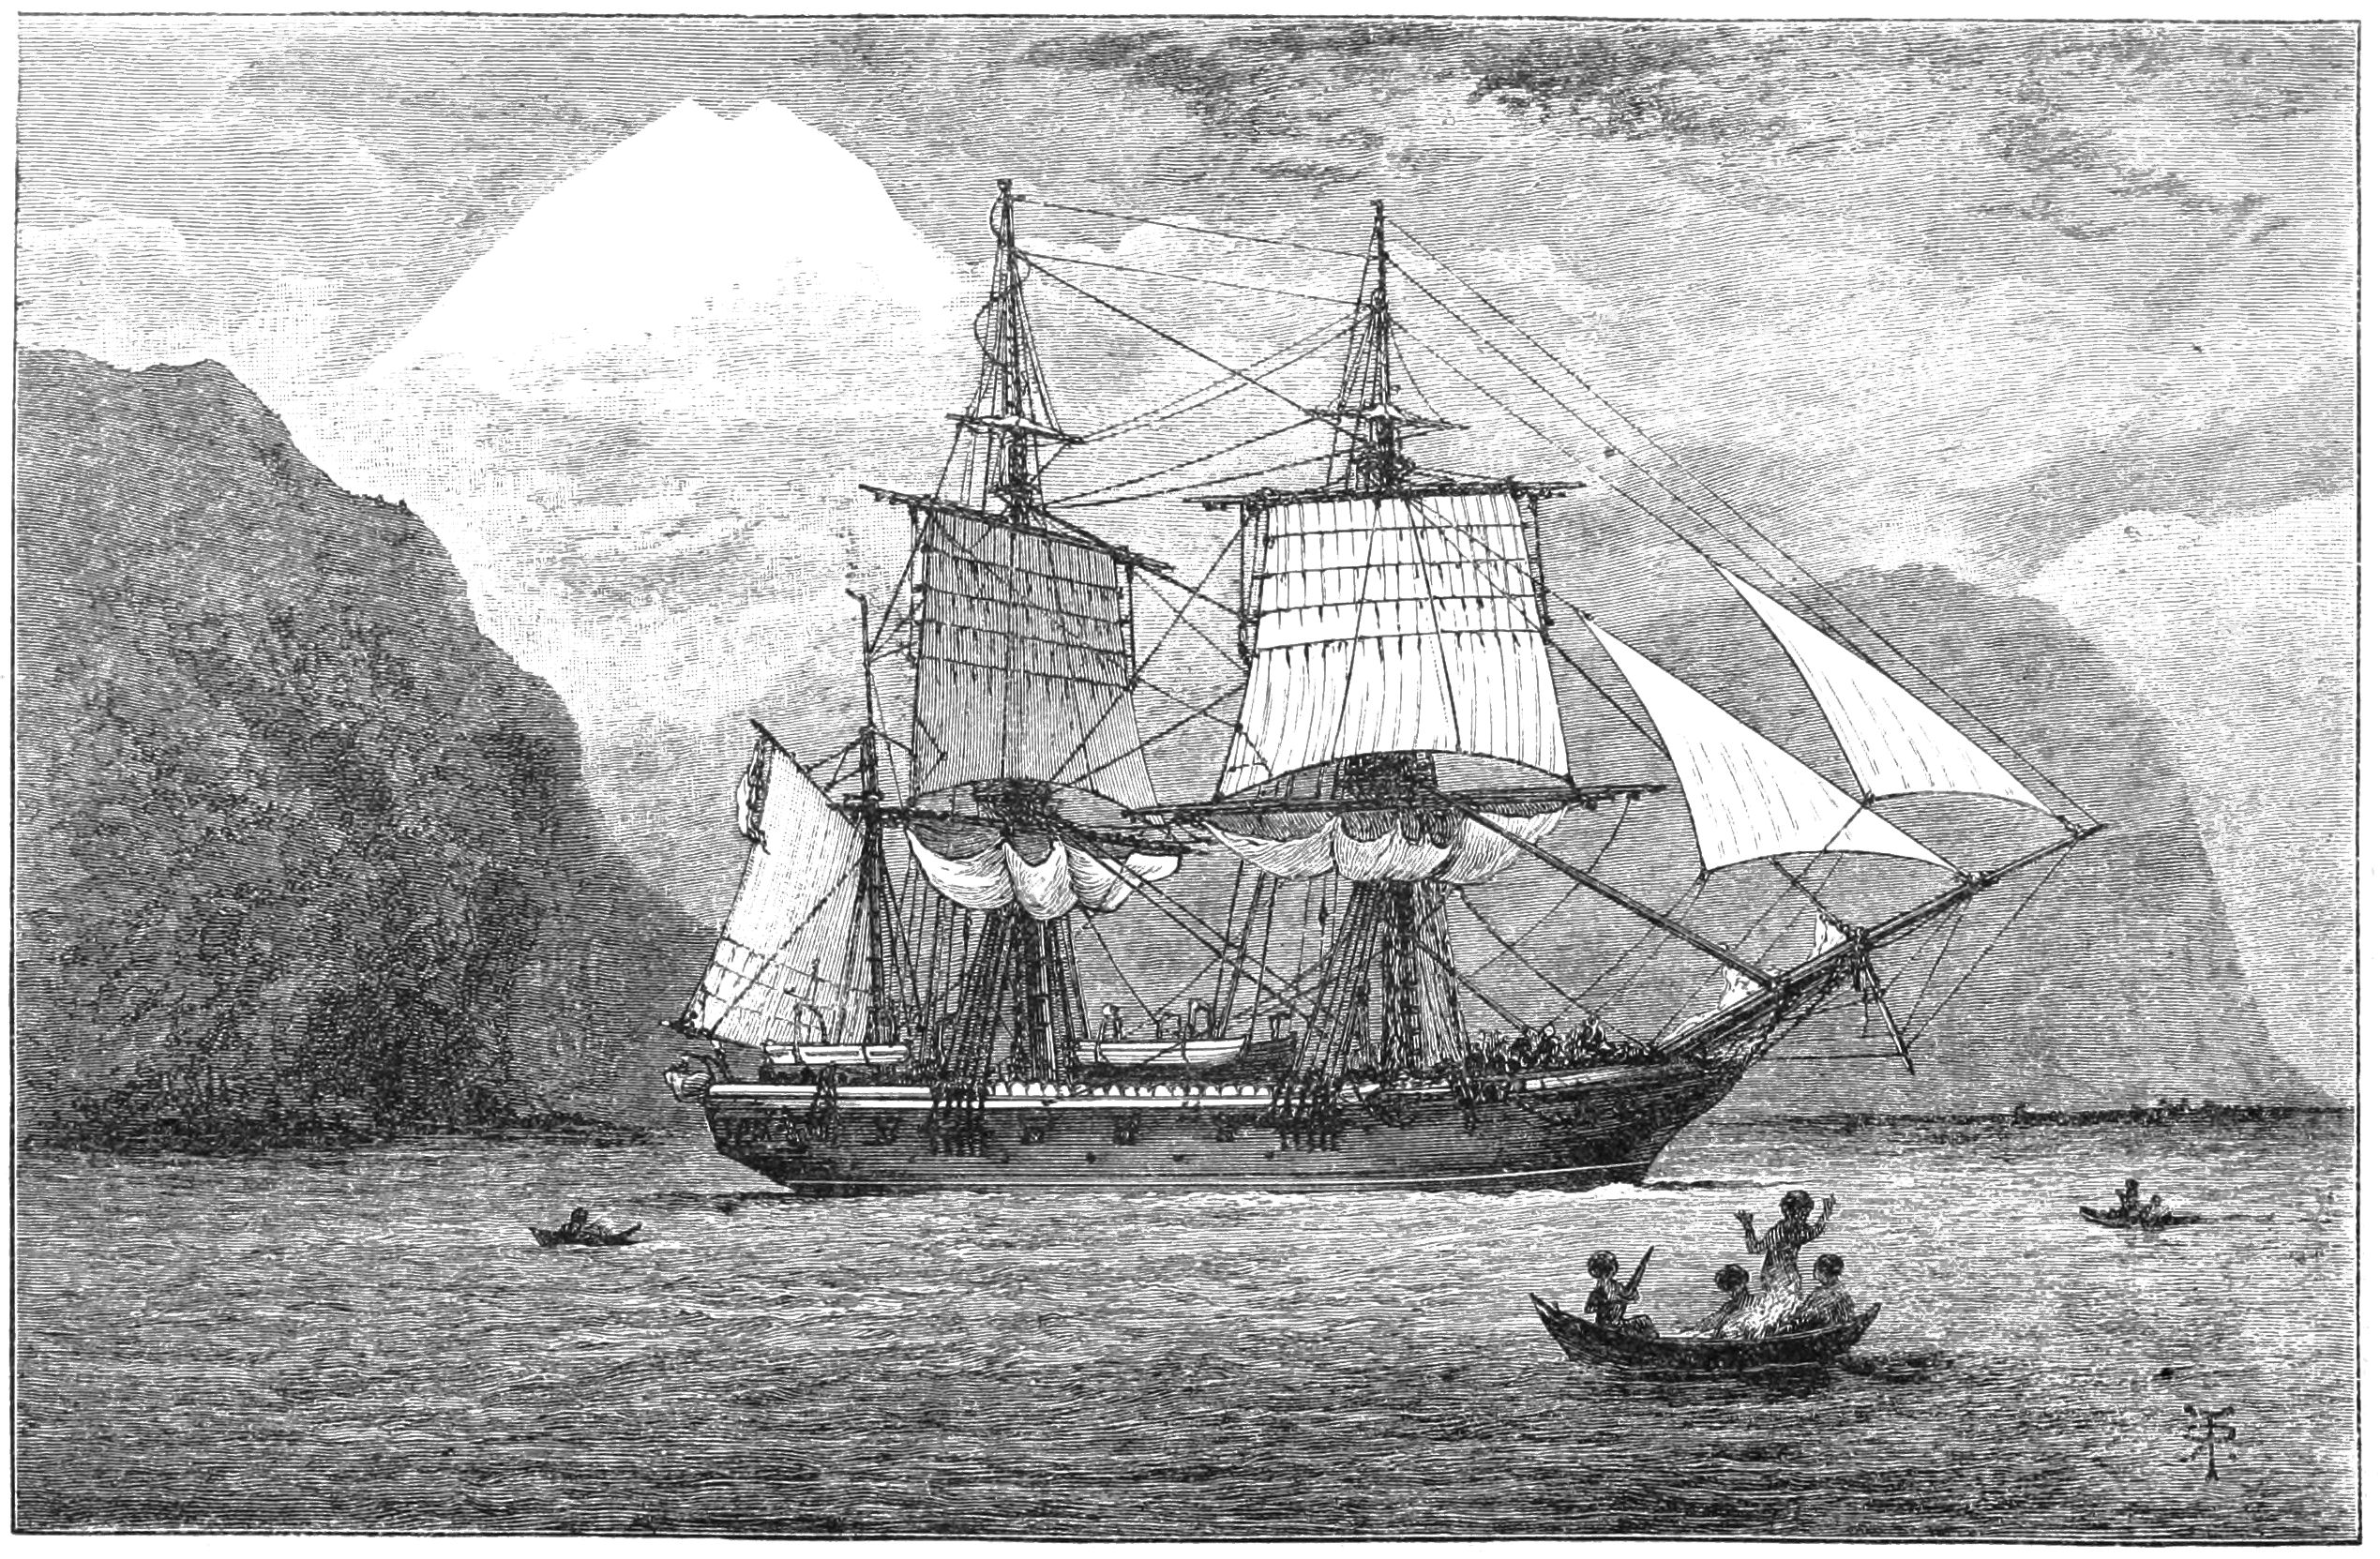 captain of beagle's voyage